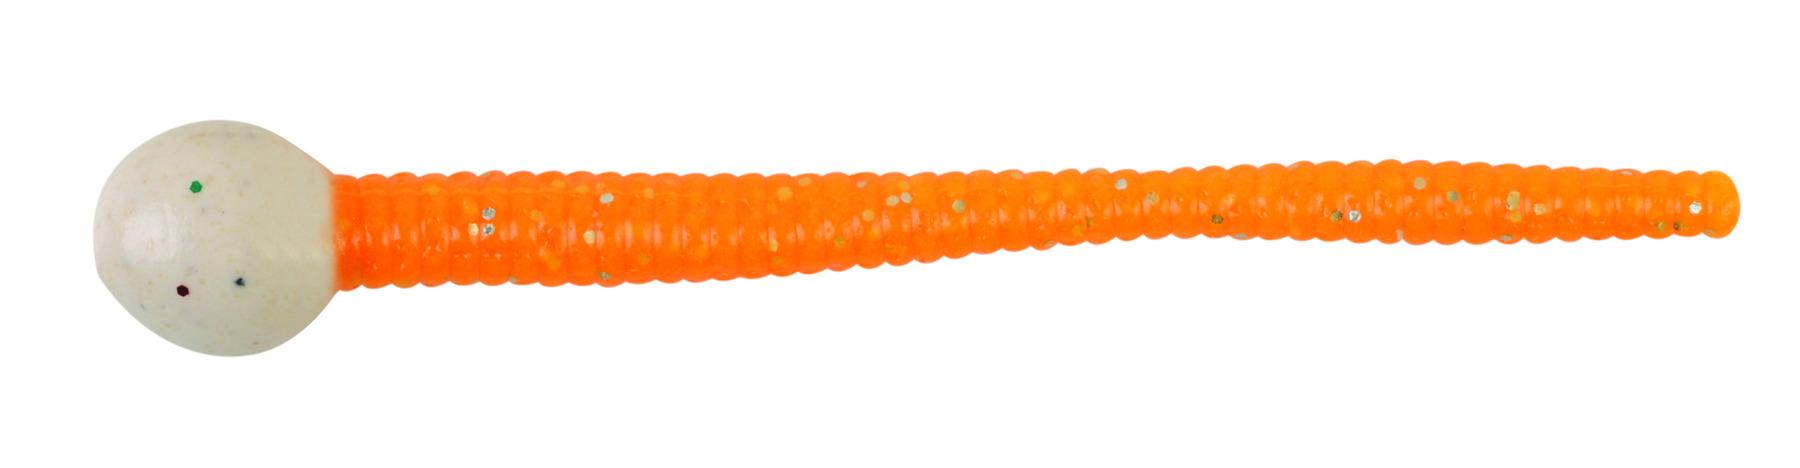 Berkley PowerBait Power Floating Trout Worm - Fluorescent Orange - 3in